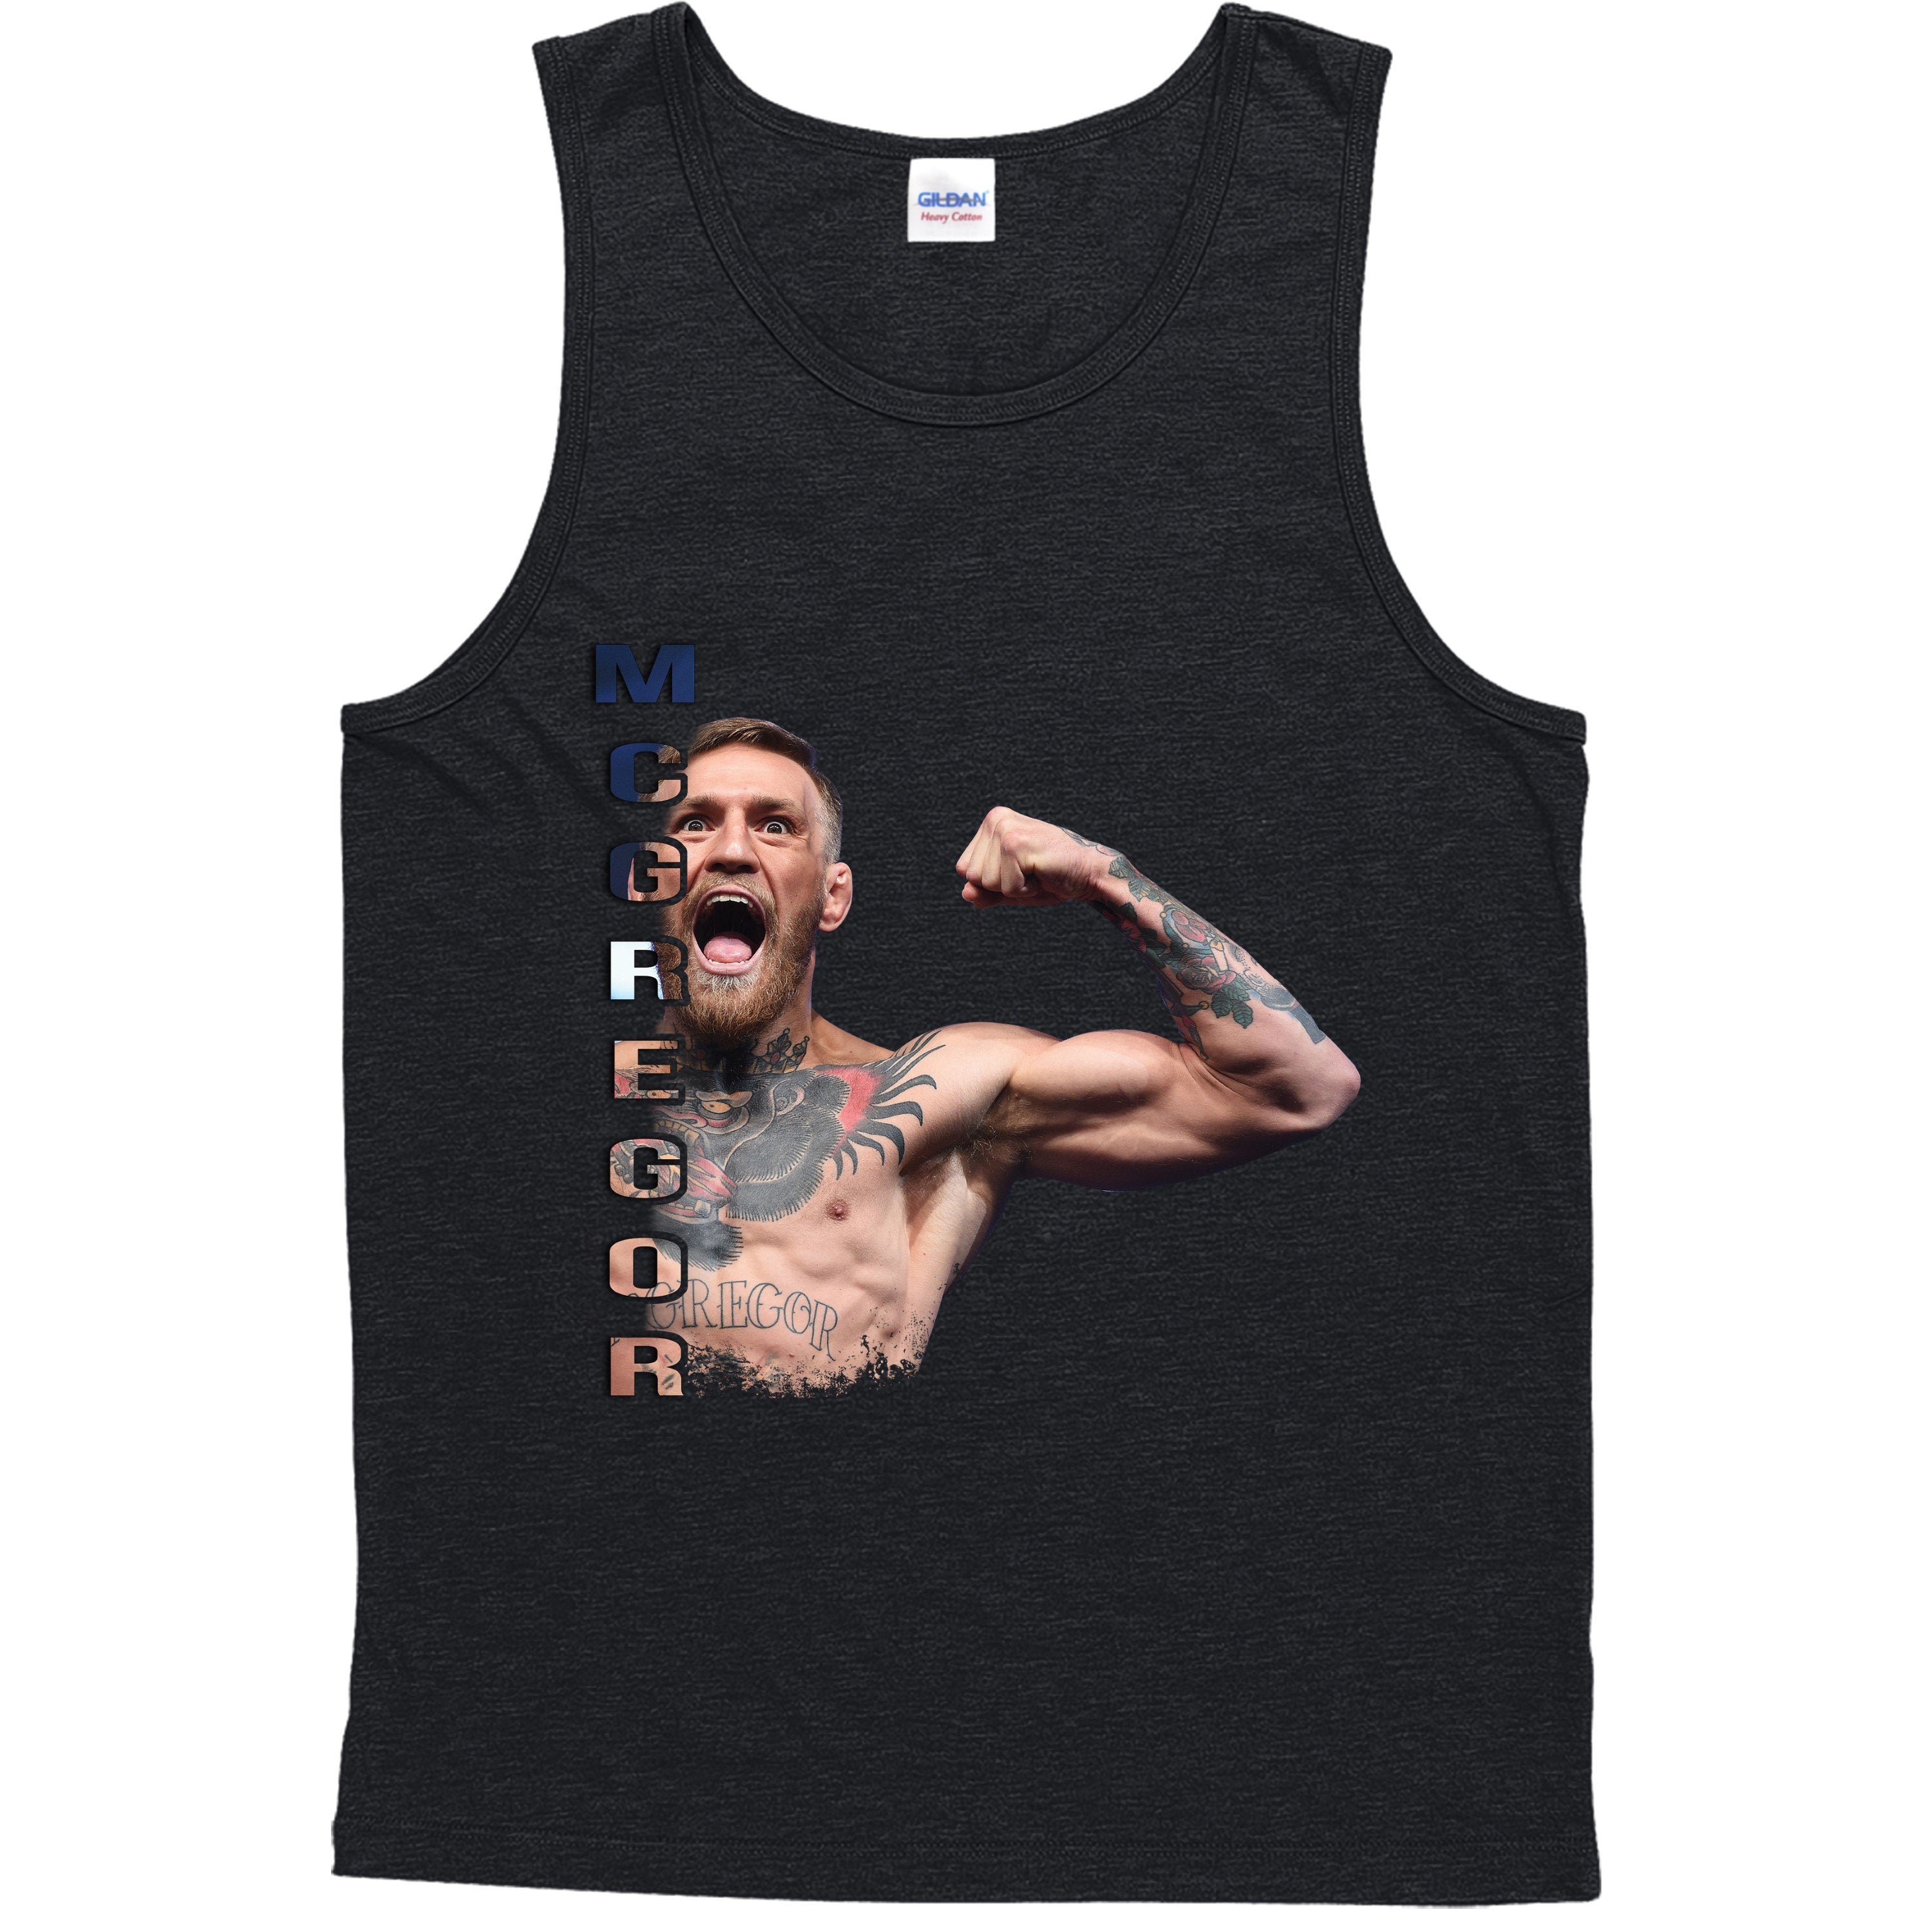 Conor Mcgregor Vest, Martial Arts Wrestler Inspired Design Tank Top Shirts